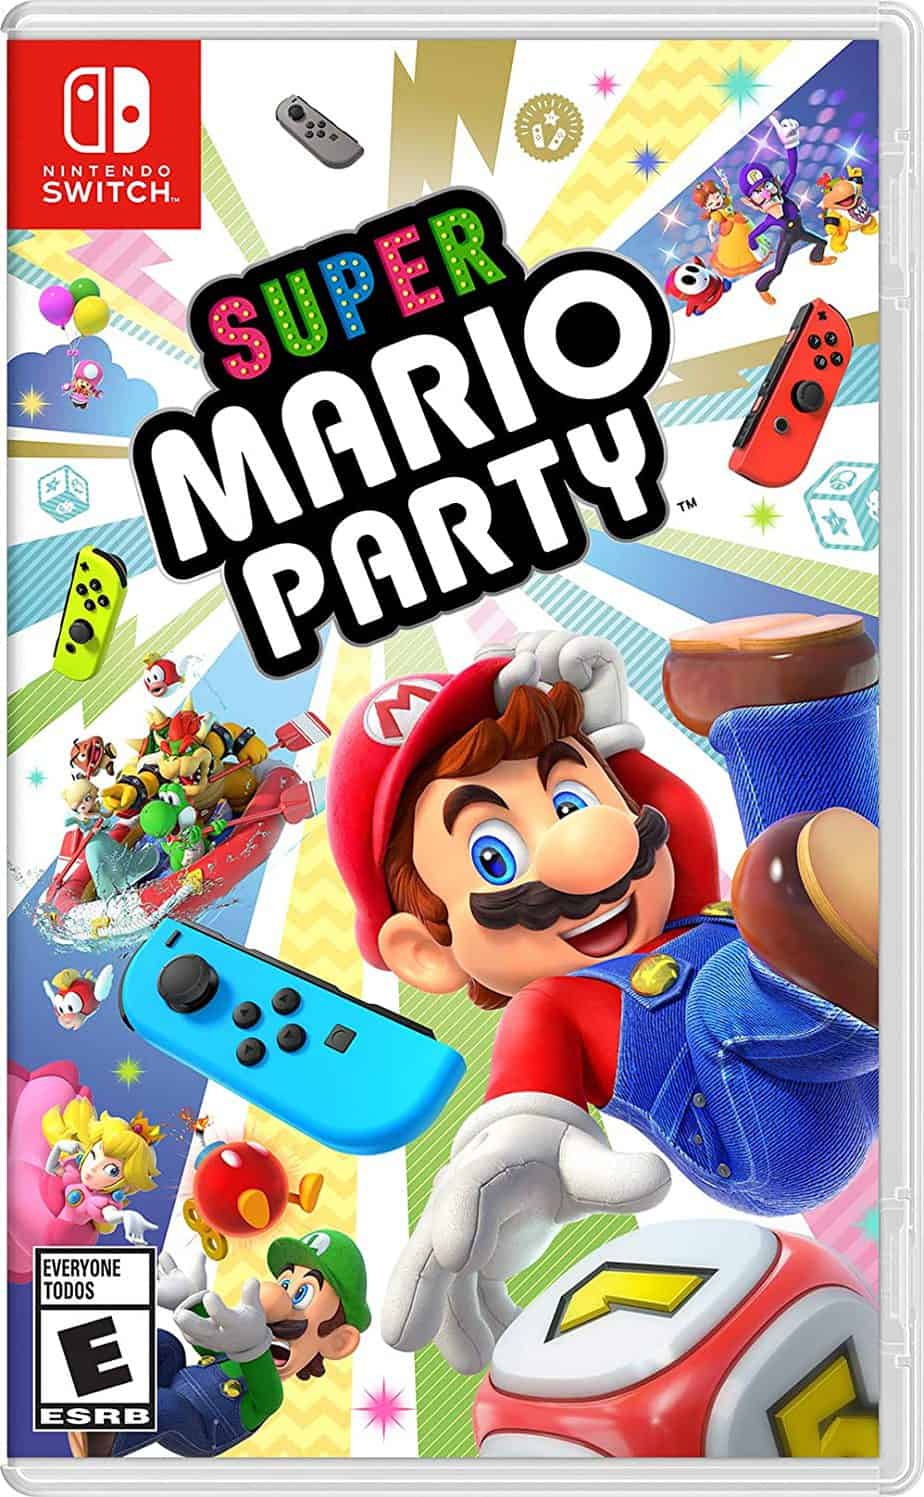 Best Mario multiplayer games - Mario Party